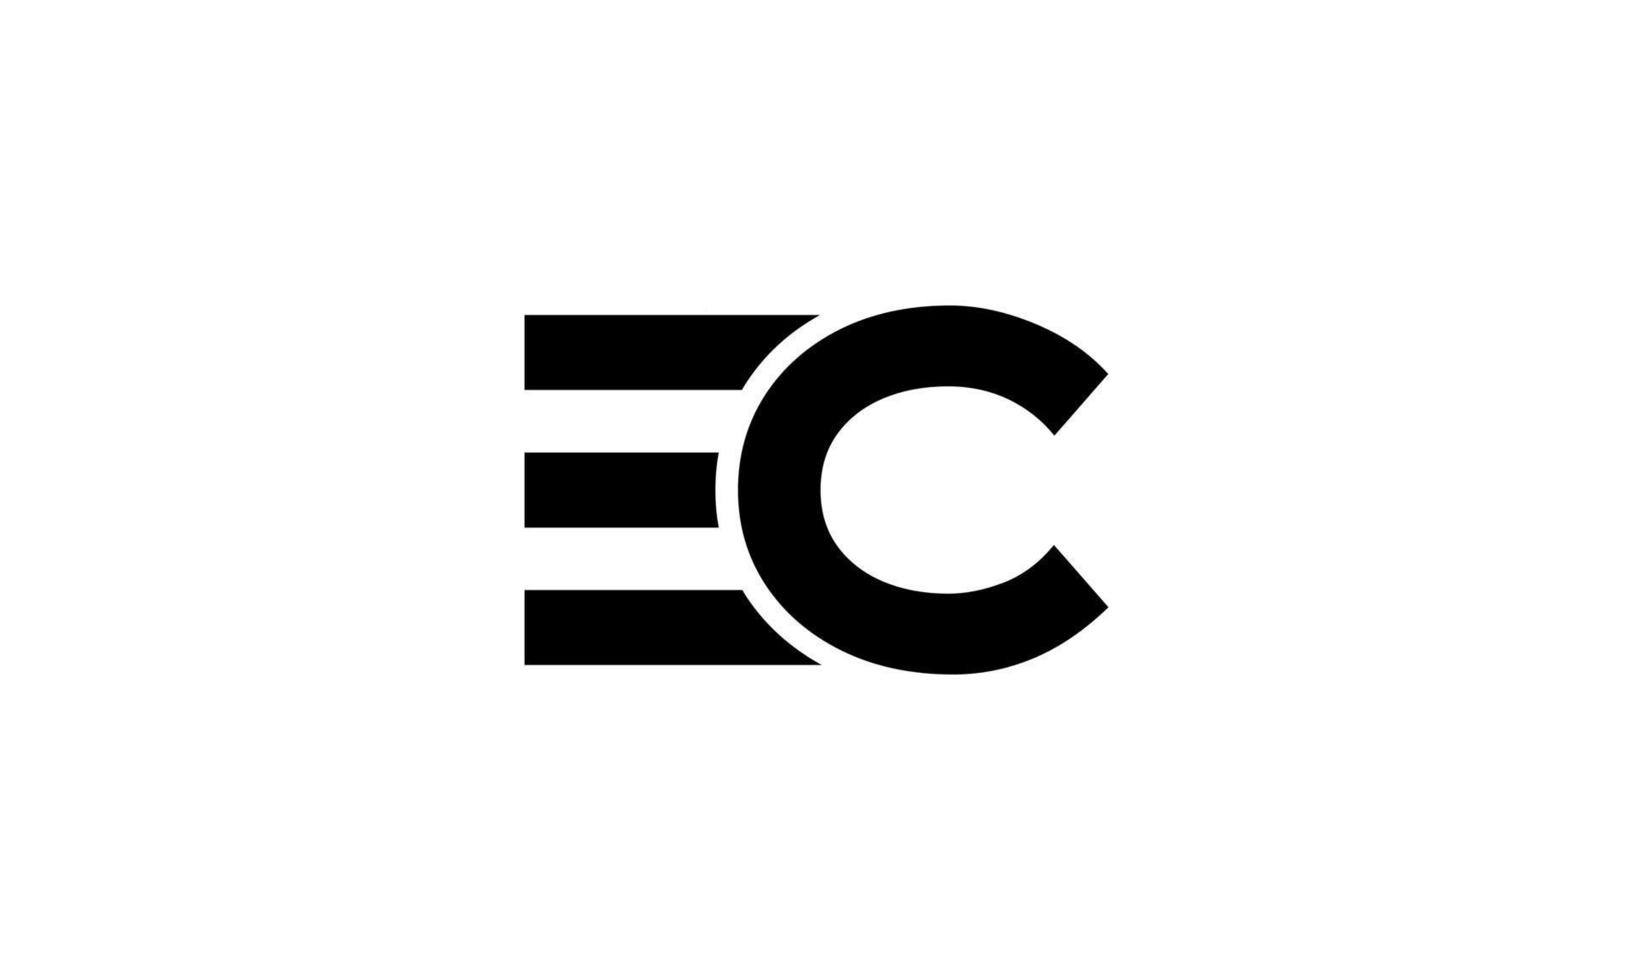 letter EC logo pro vector file pro Vector